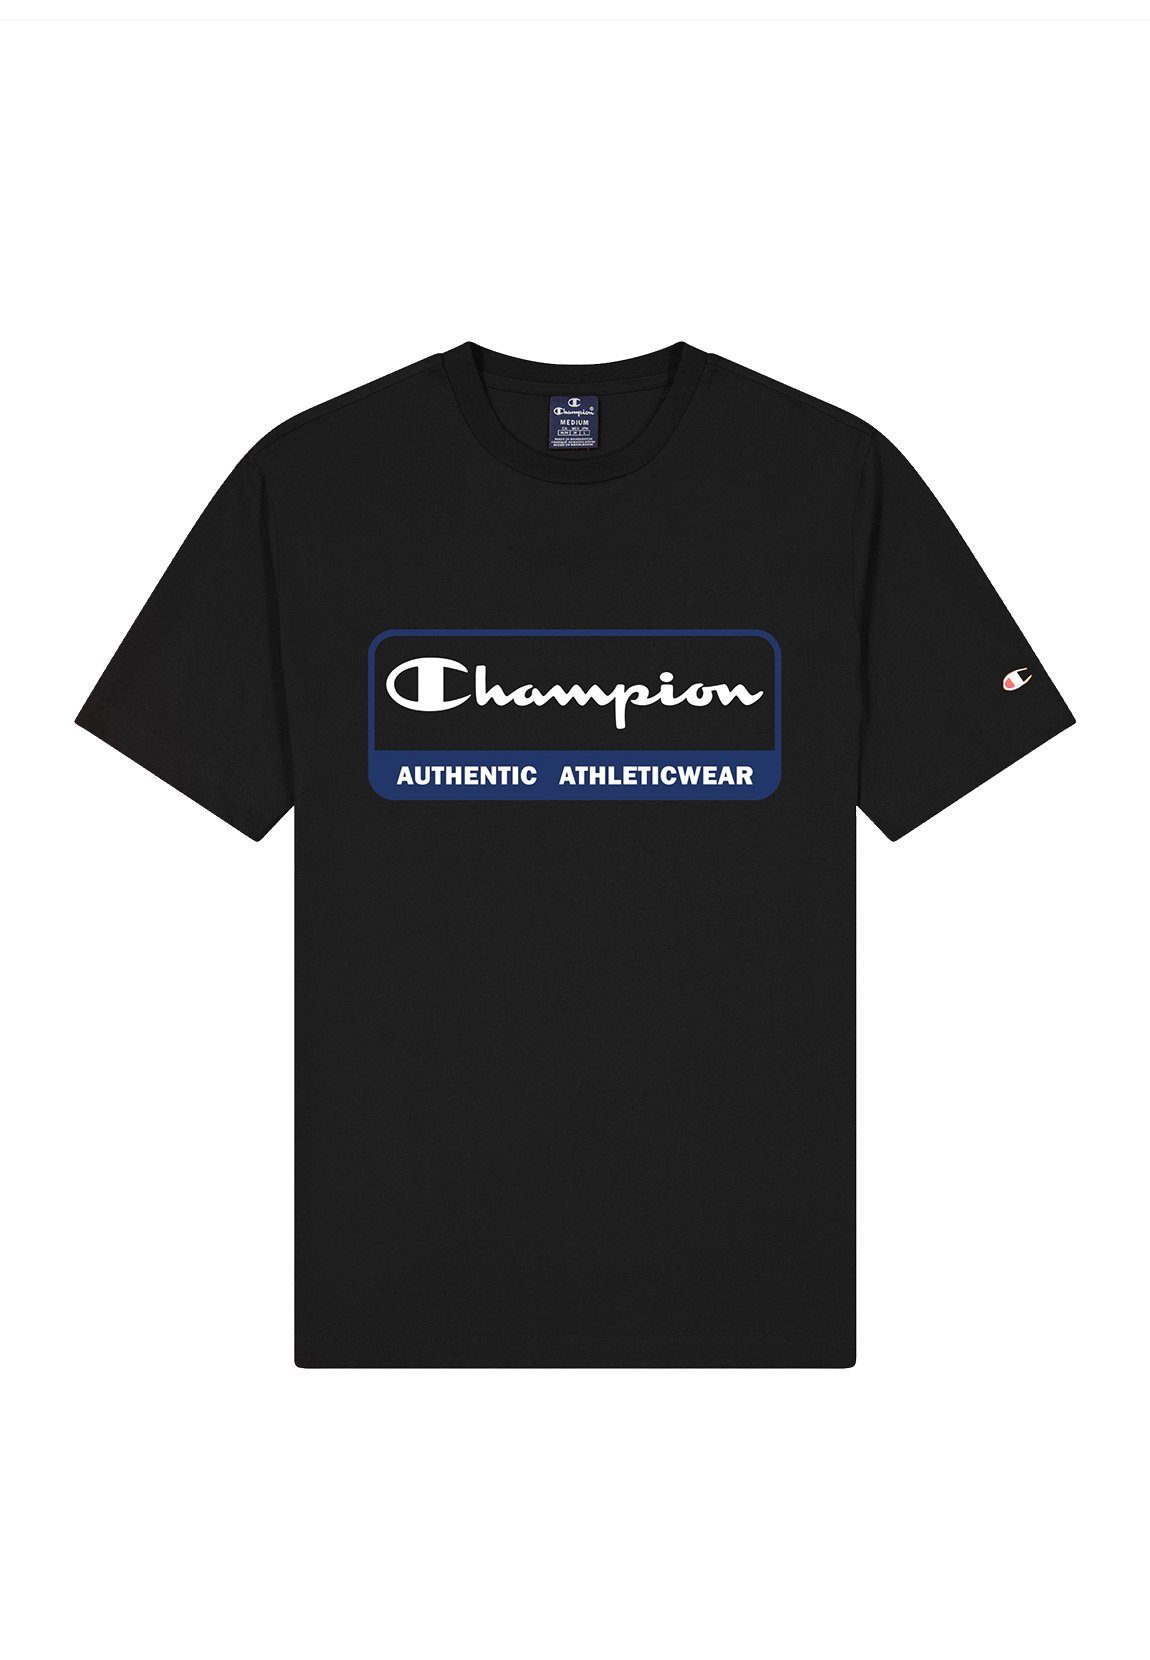 NBK Champion T-Shirt T-Shirt Schwarz KK001 Champion Herren 219165